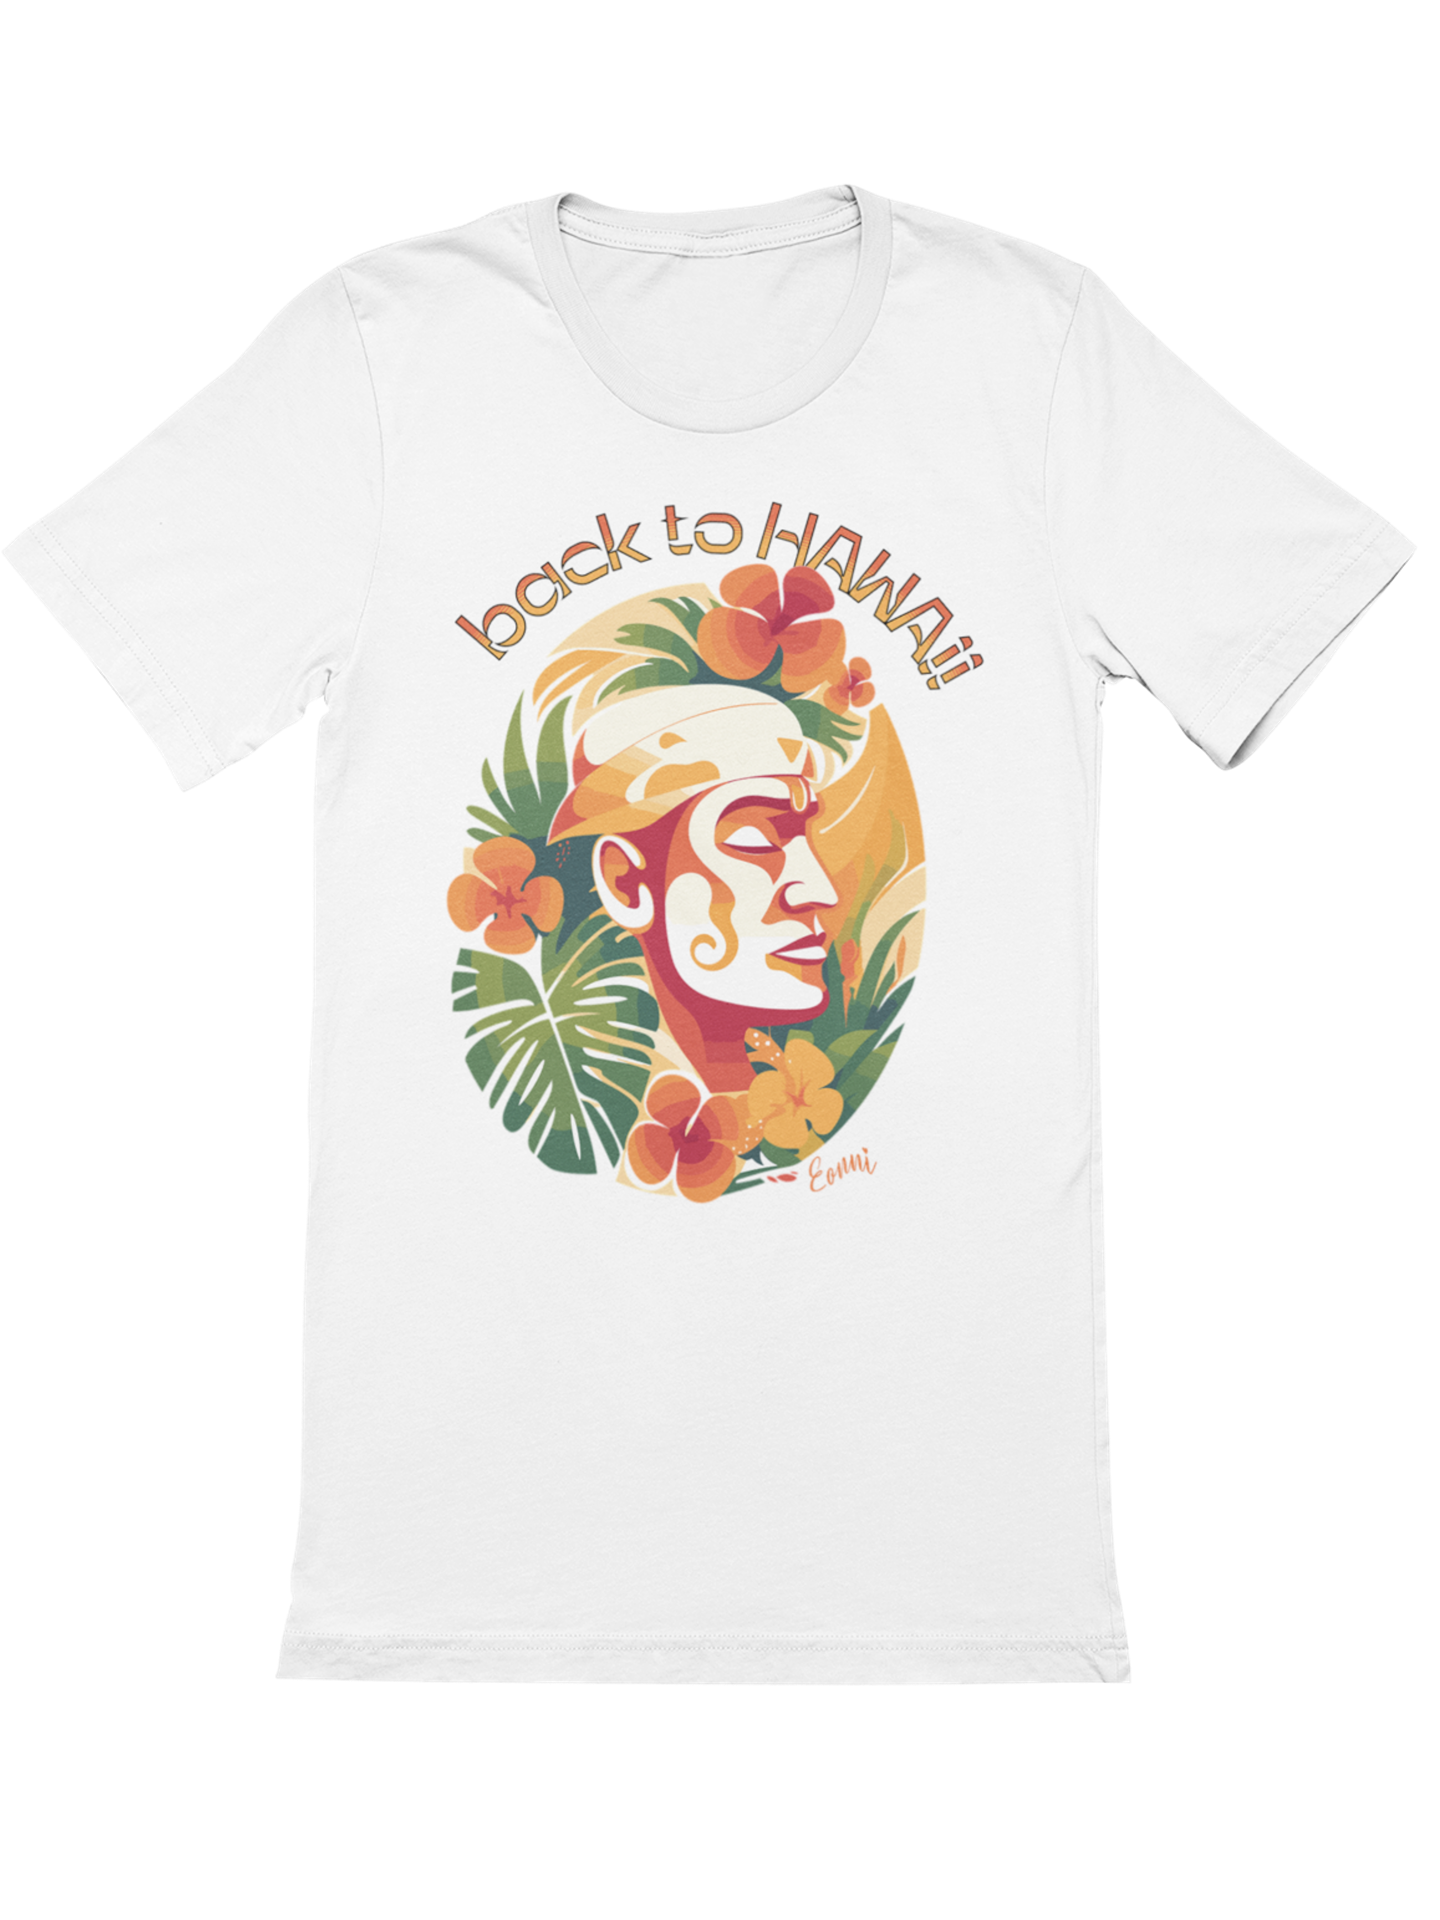 Back to Hawaii 2 Vacation Island Japan Bio T-Shirt 1062